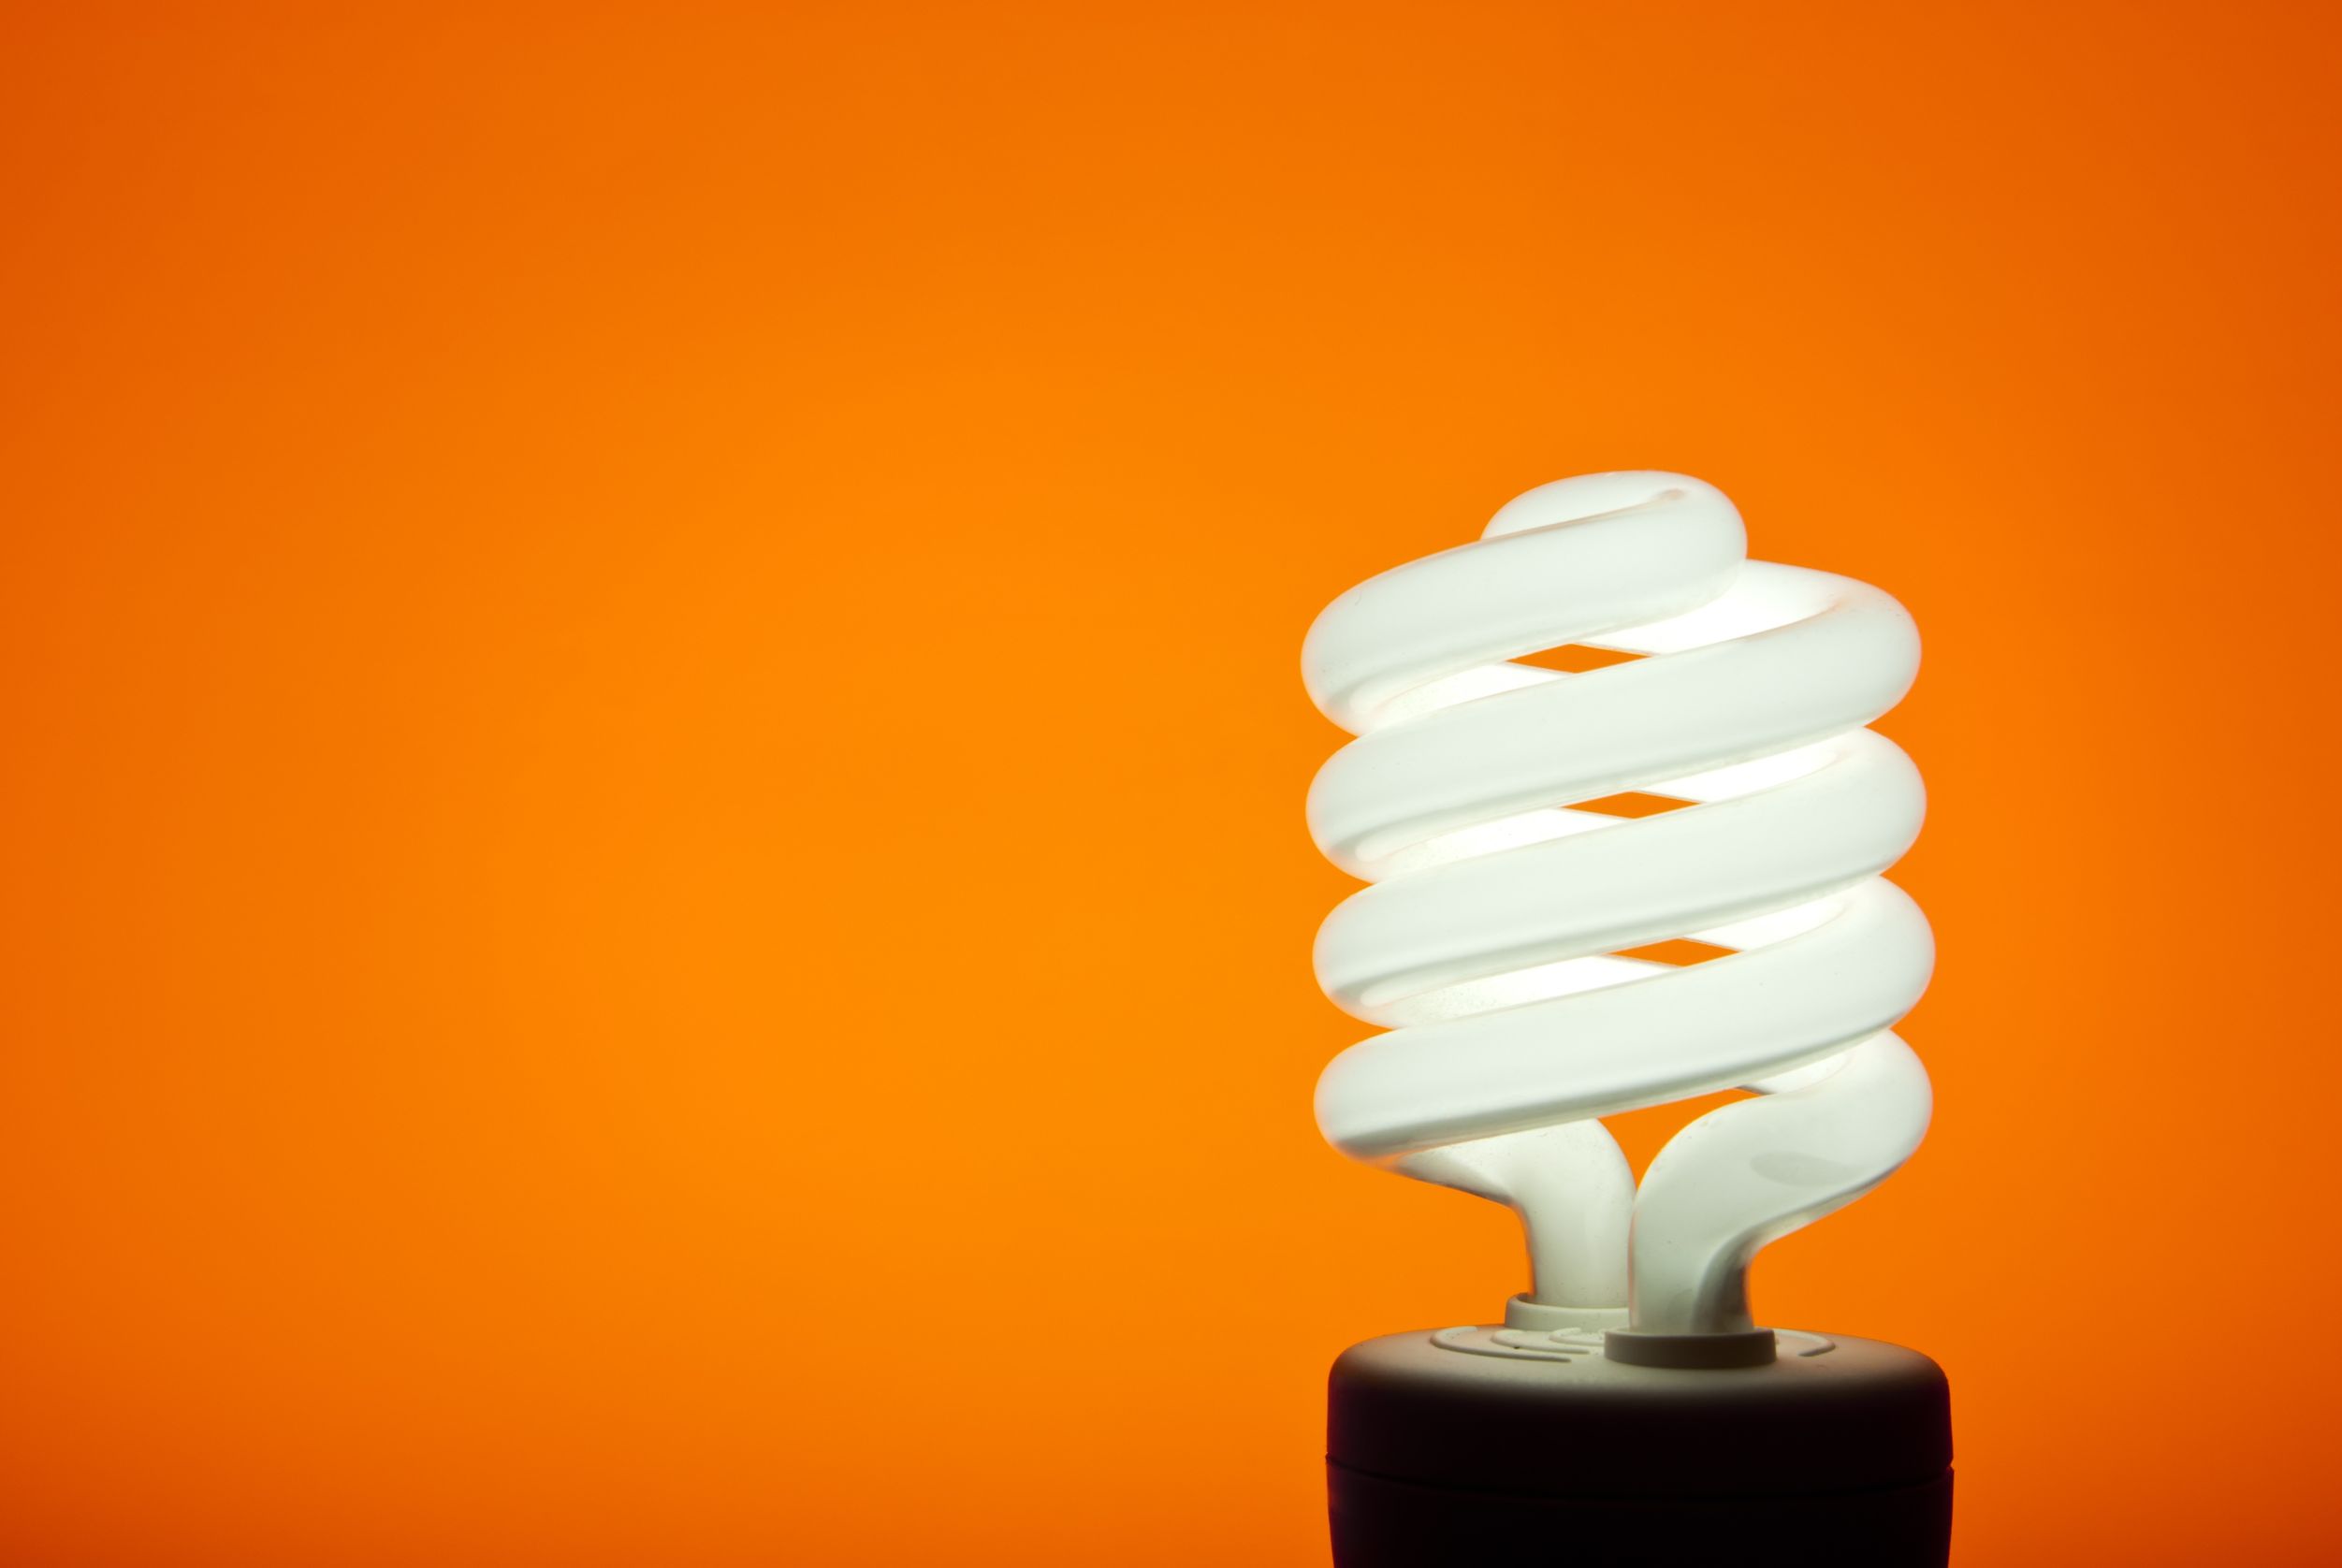 smart light bulb on orange background